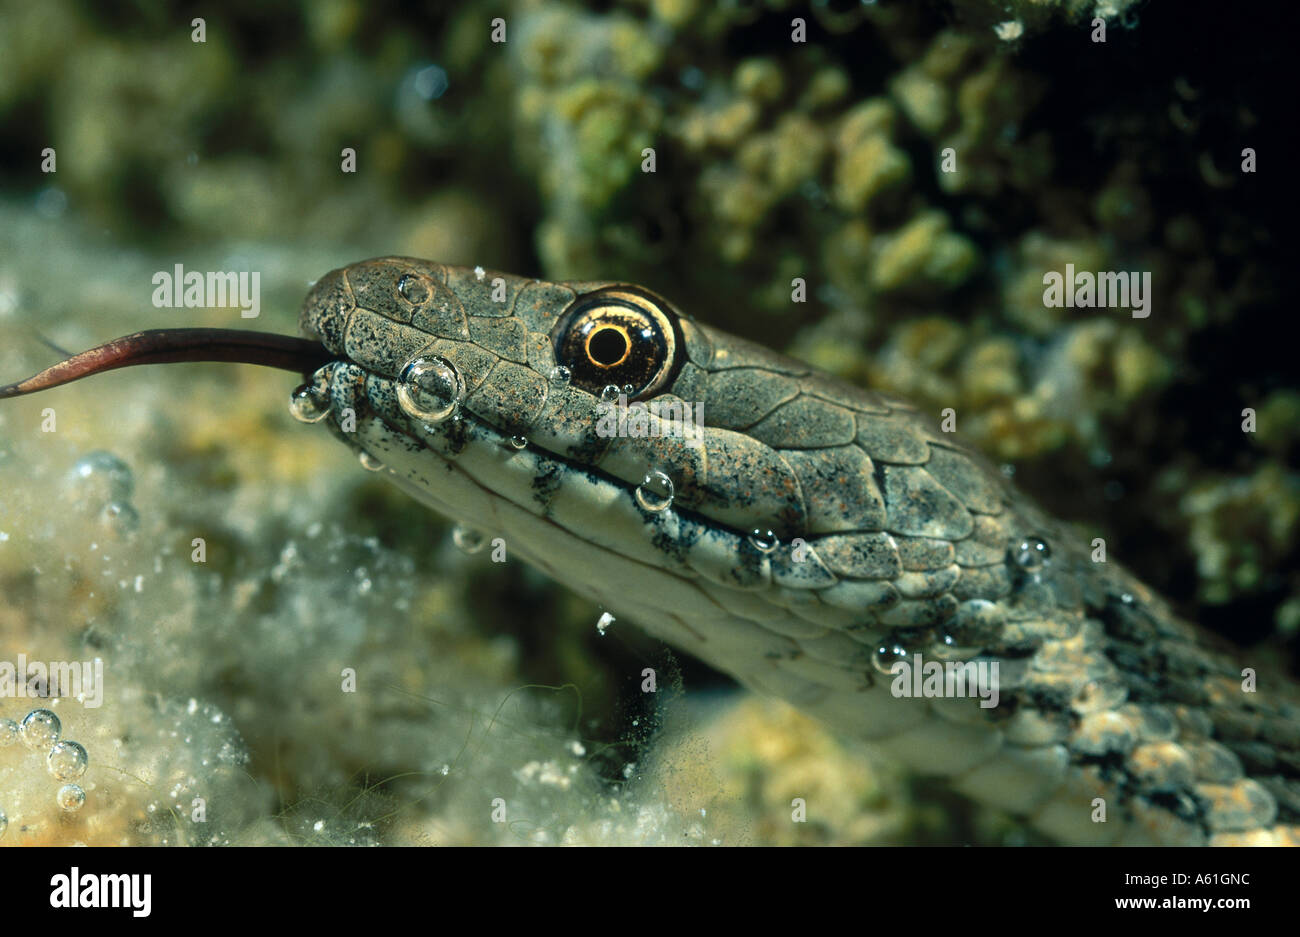 Close-up of Dice snake (Natrix tessellata) underwater Stock Photo